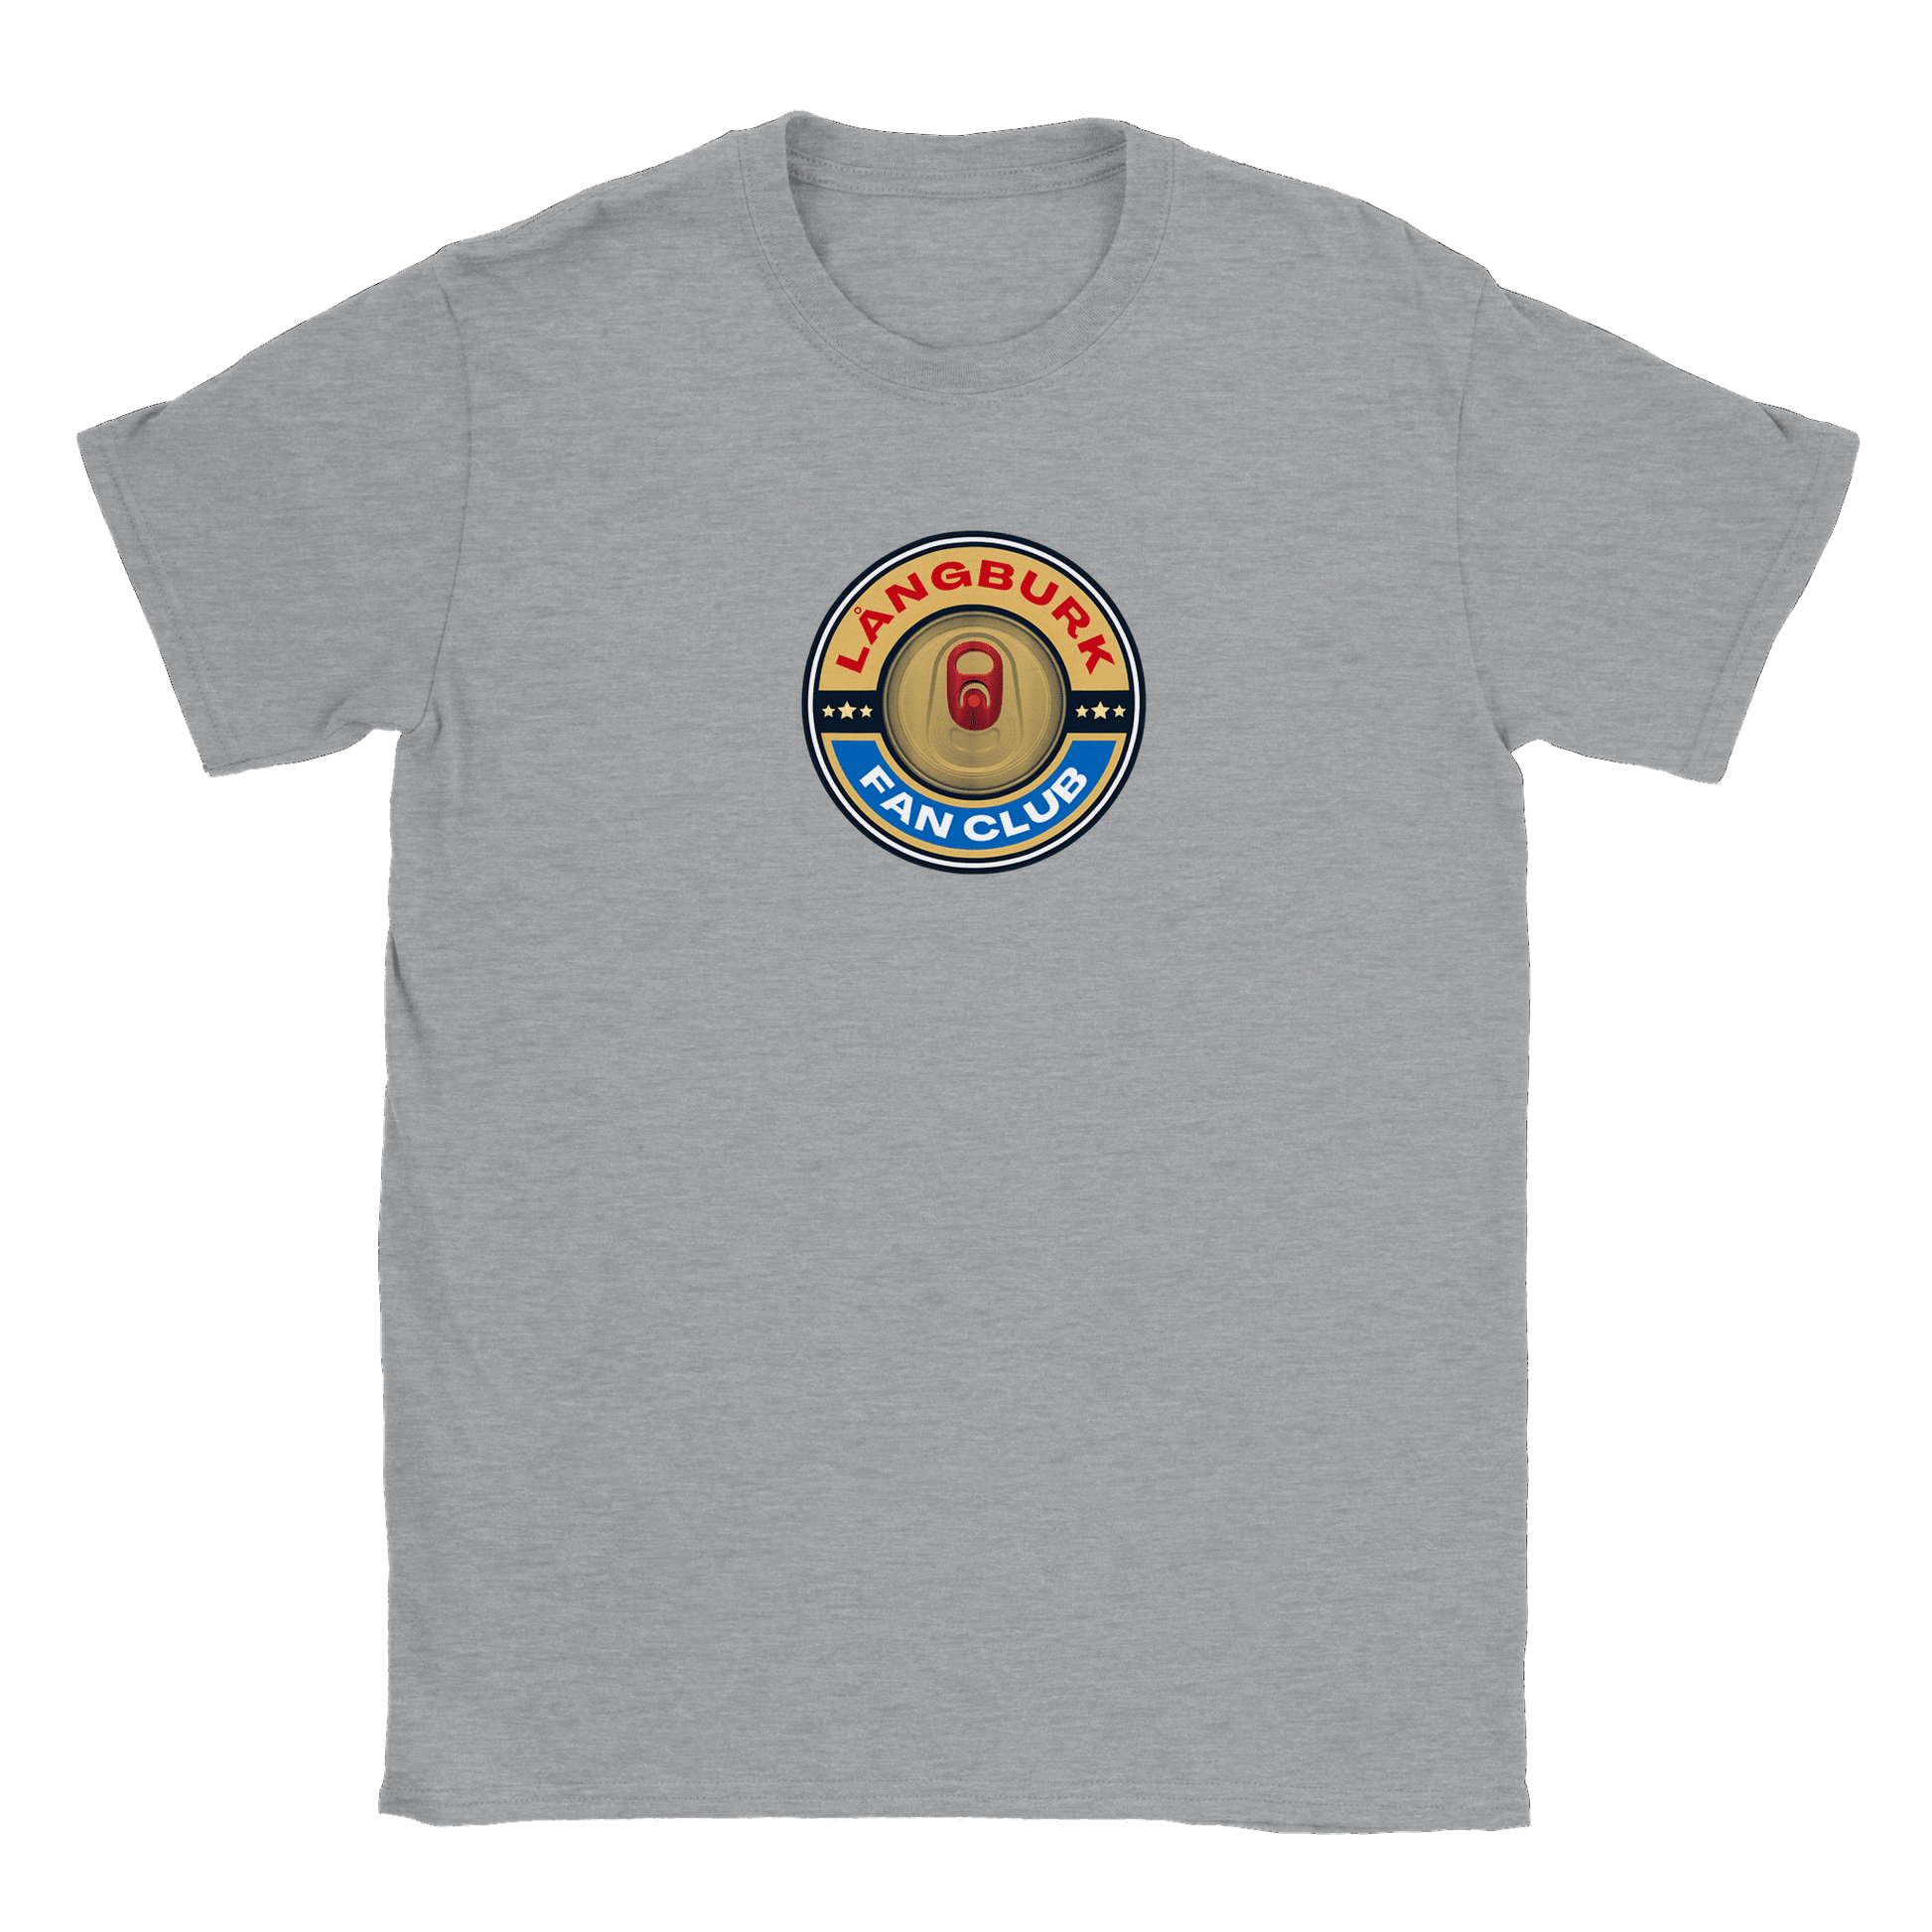 Långburk Fan Club Norrland Edition - T-shirt Sports Grey